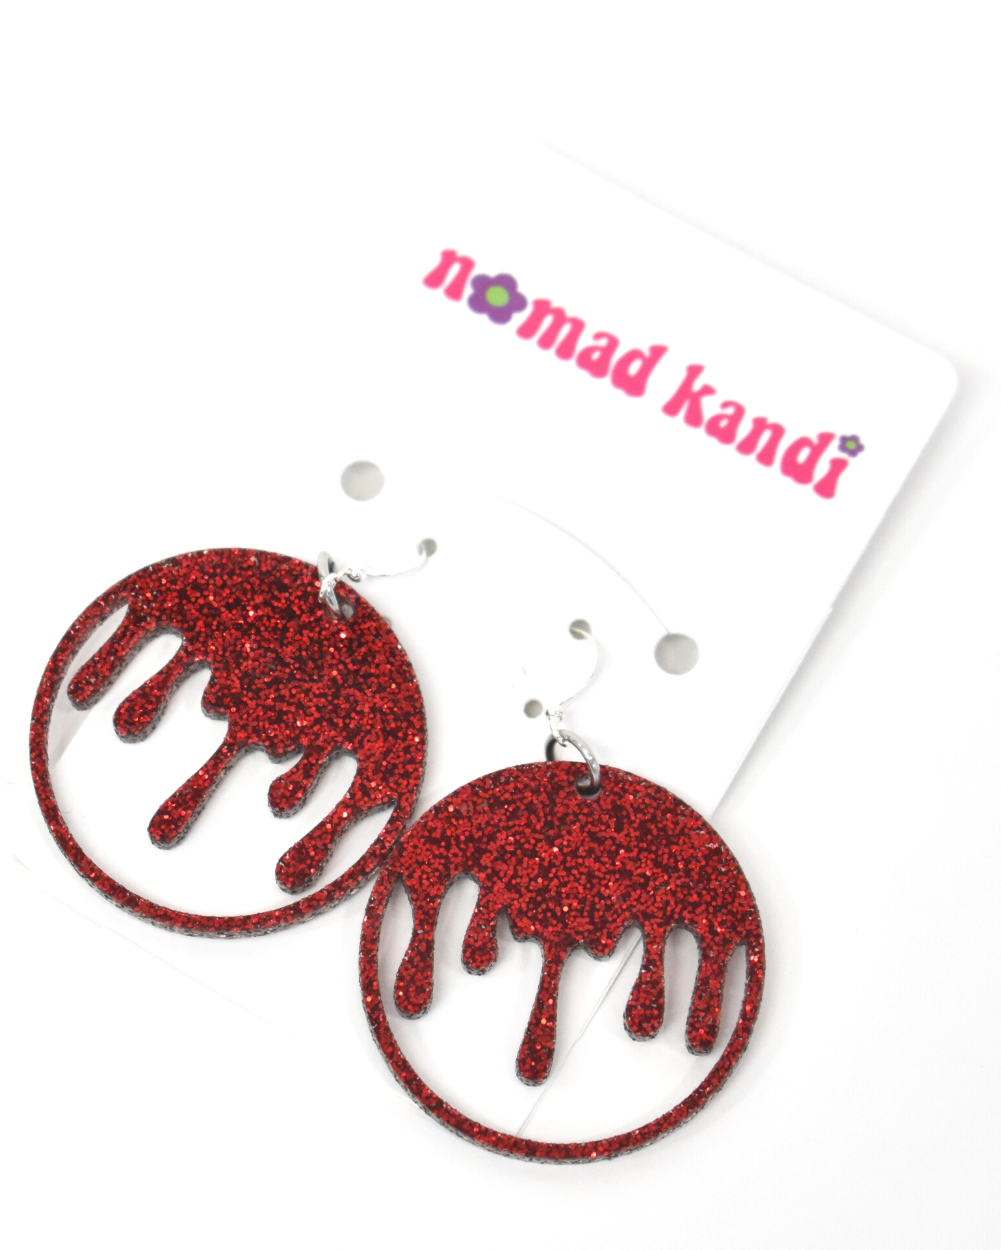 I Bleed Glitter Earrings- Nomad Kandi - Lunautics Earrings